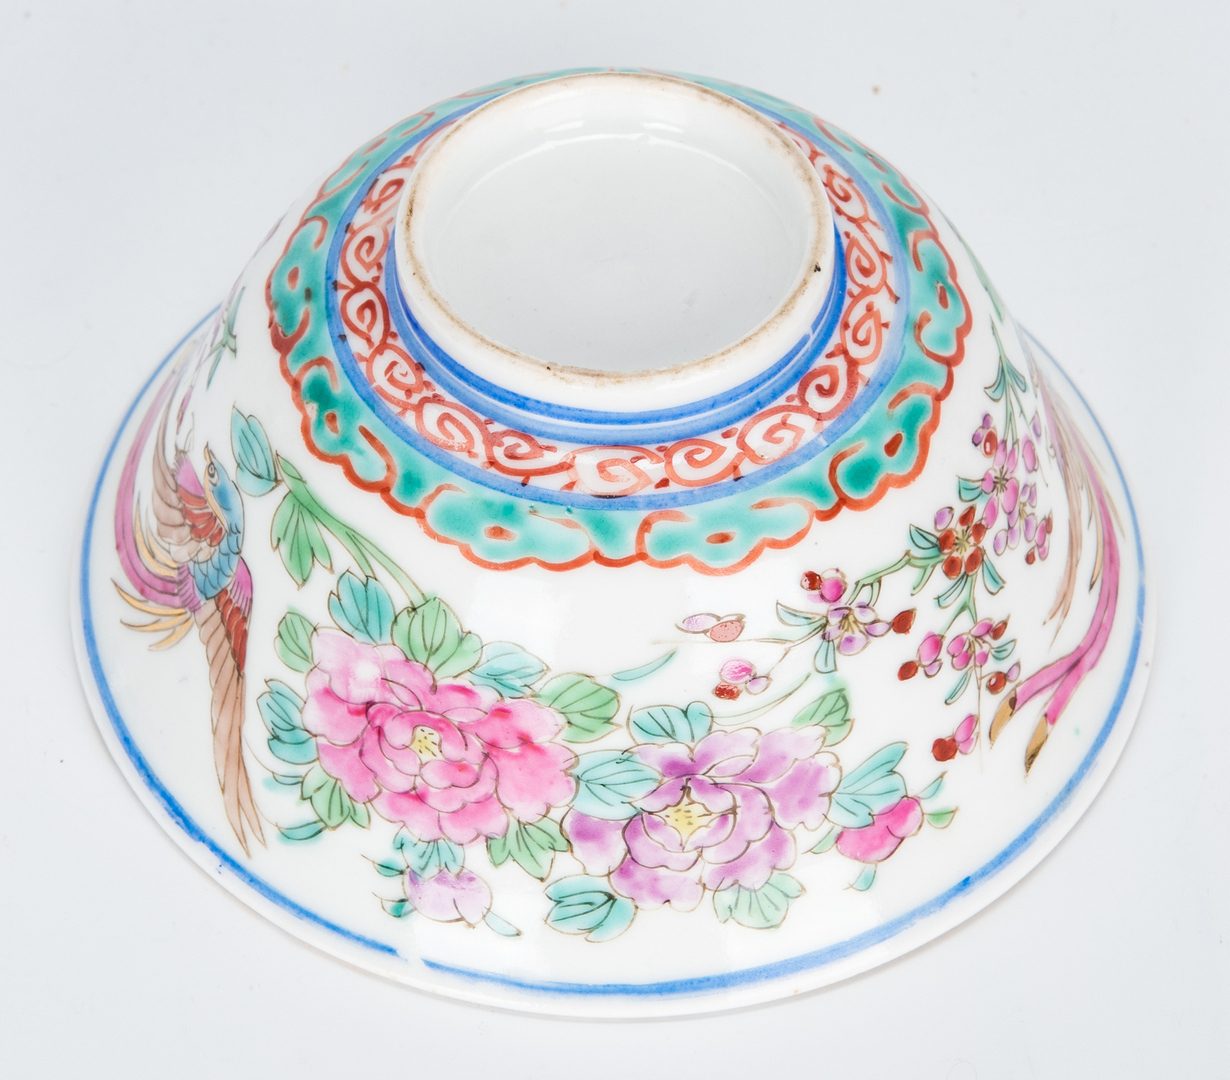 Lot 473: 6 Asian Decorative Items